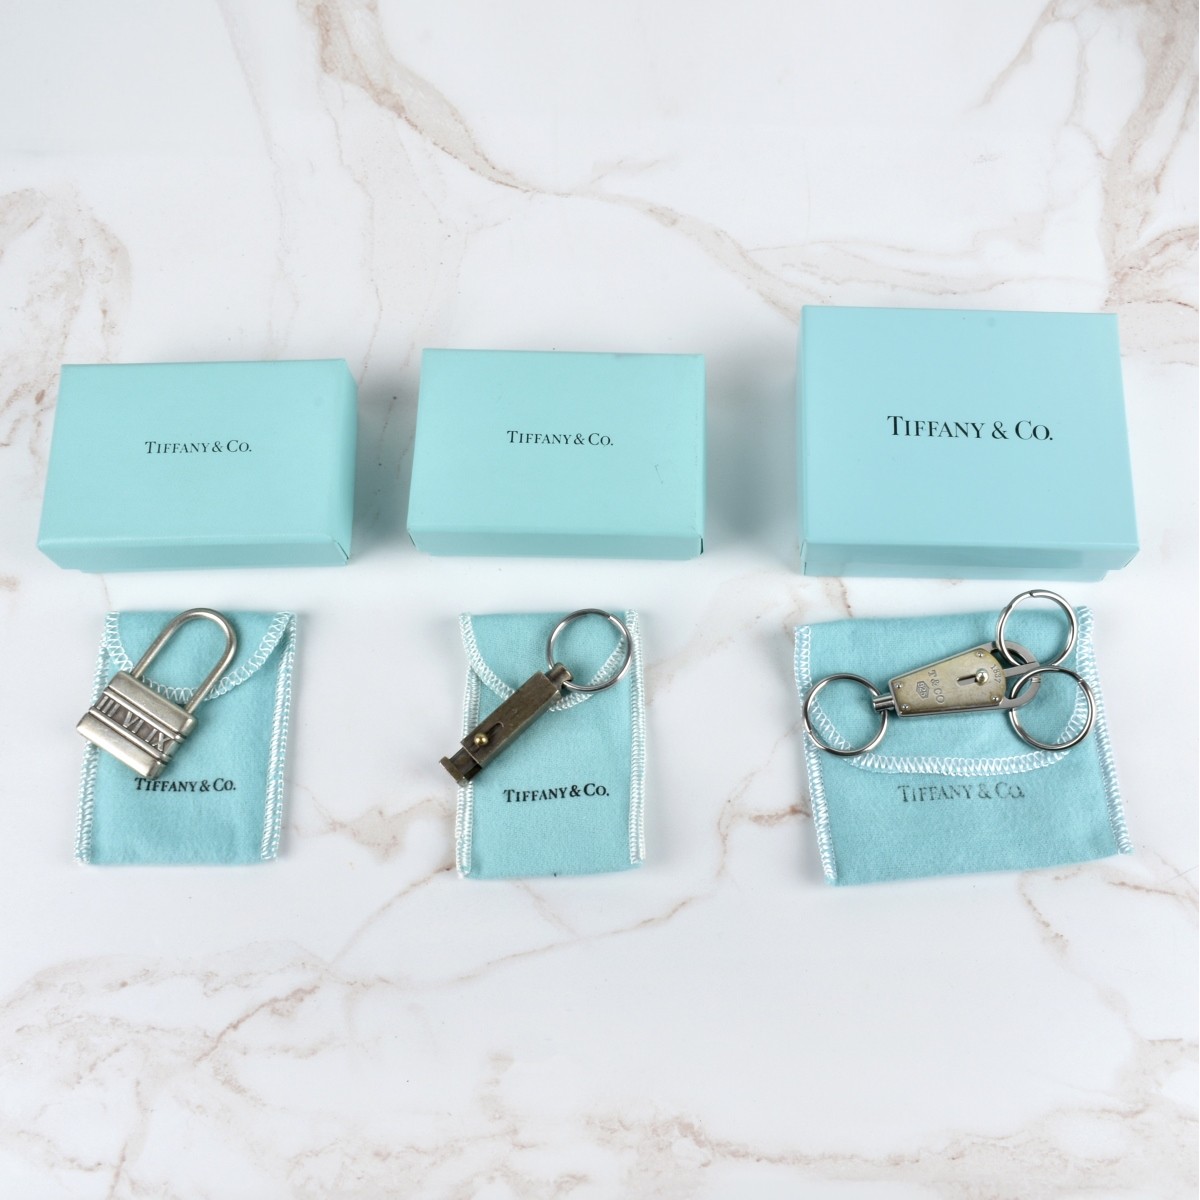 Tiffany & Co Keyrings